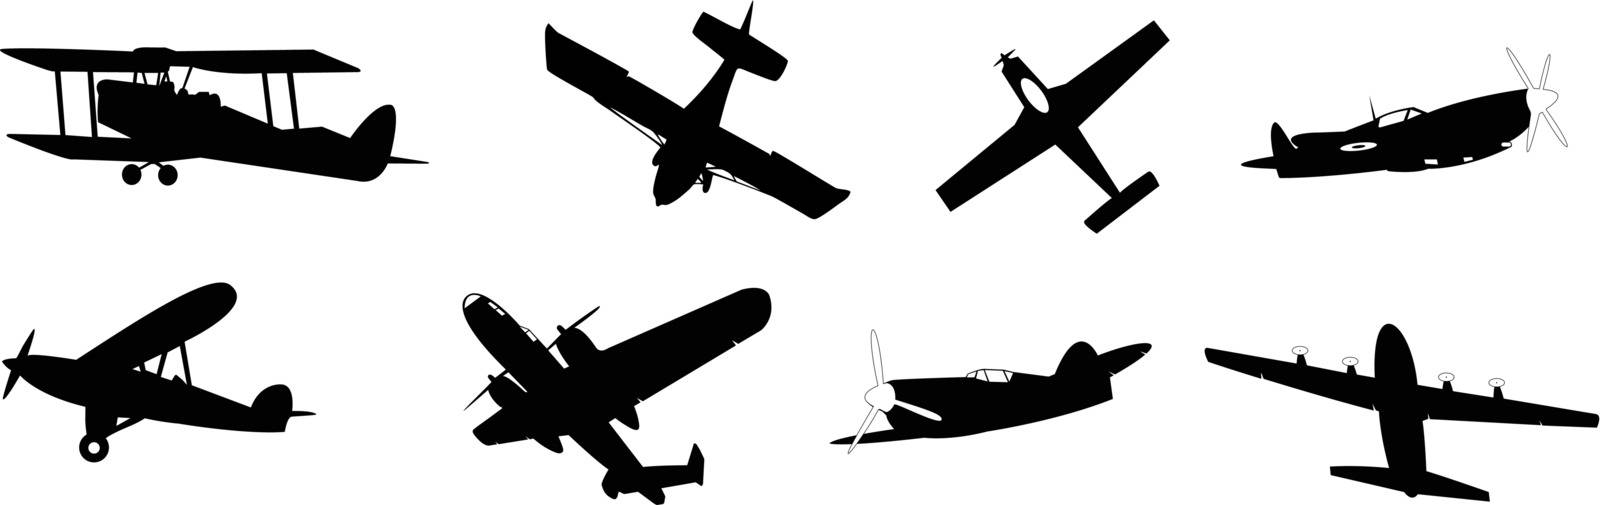 propeller planes by nelsonart